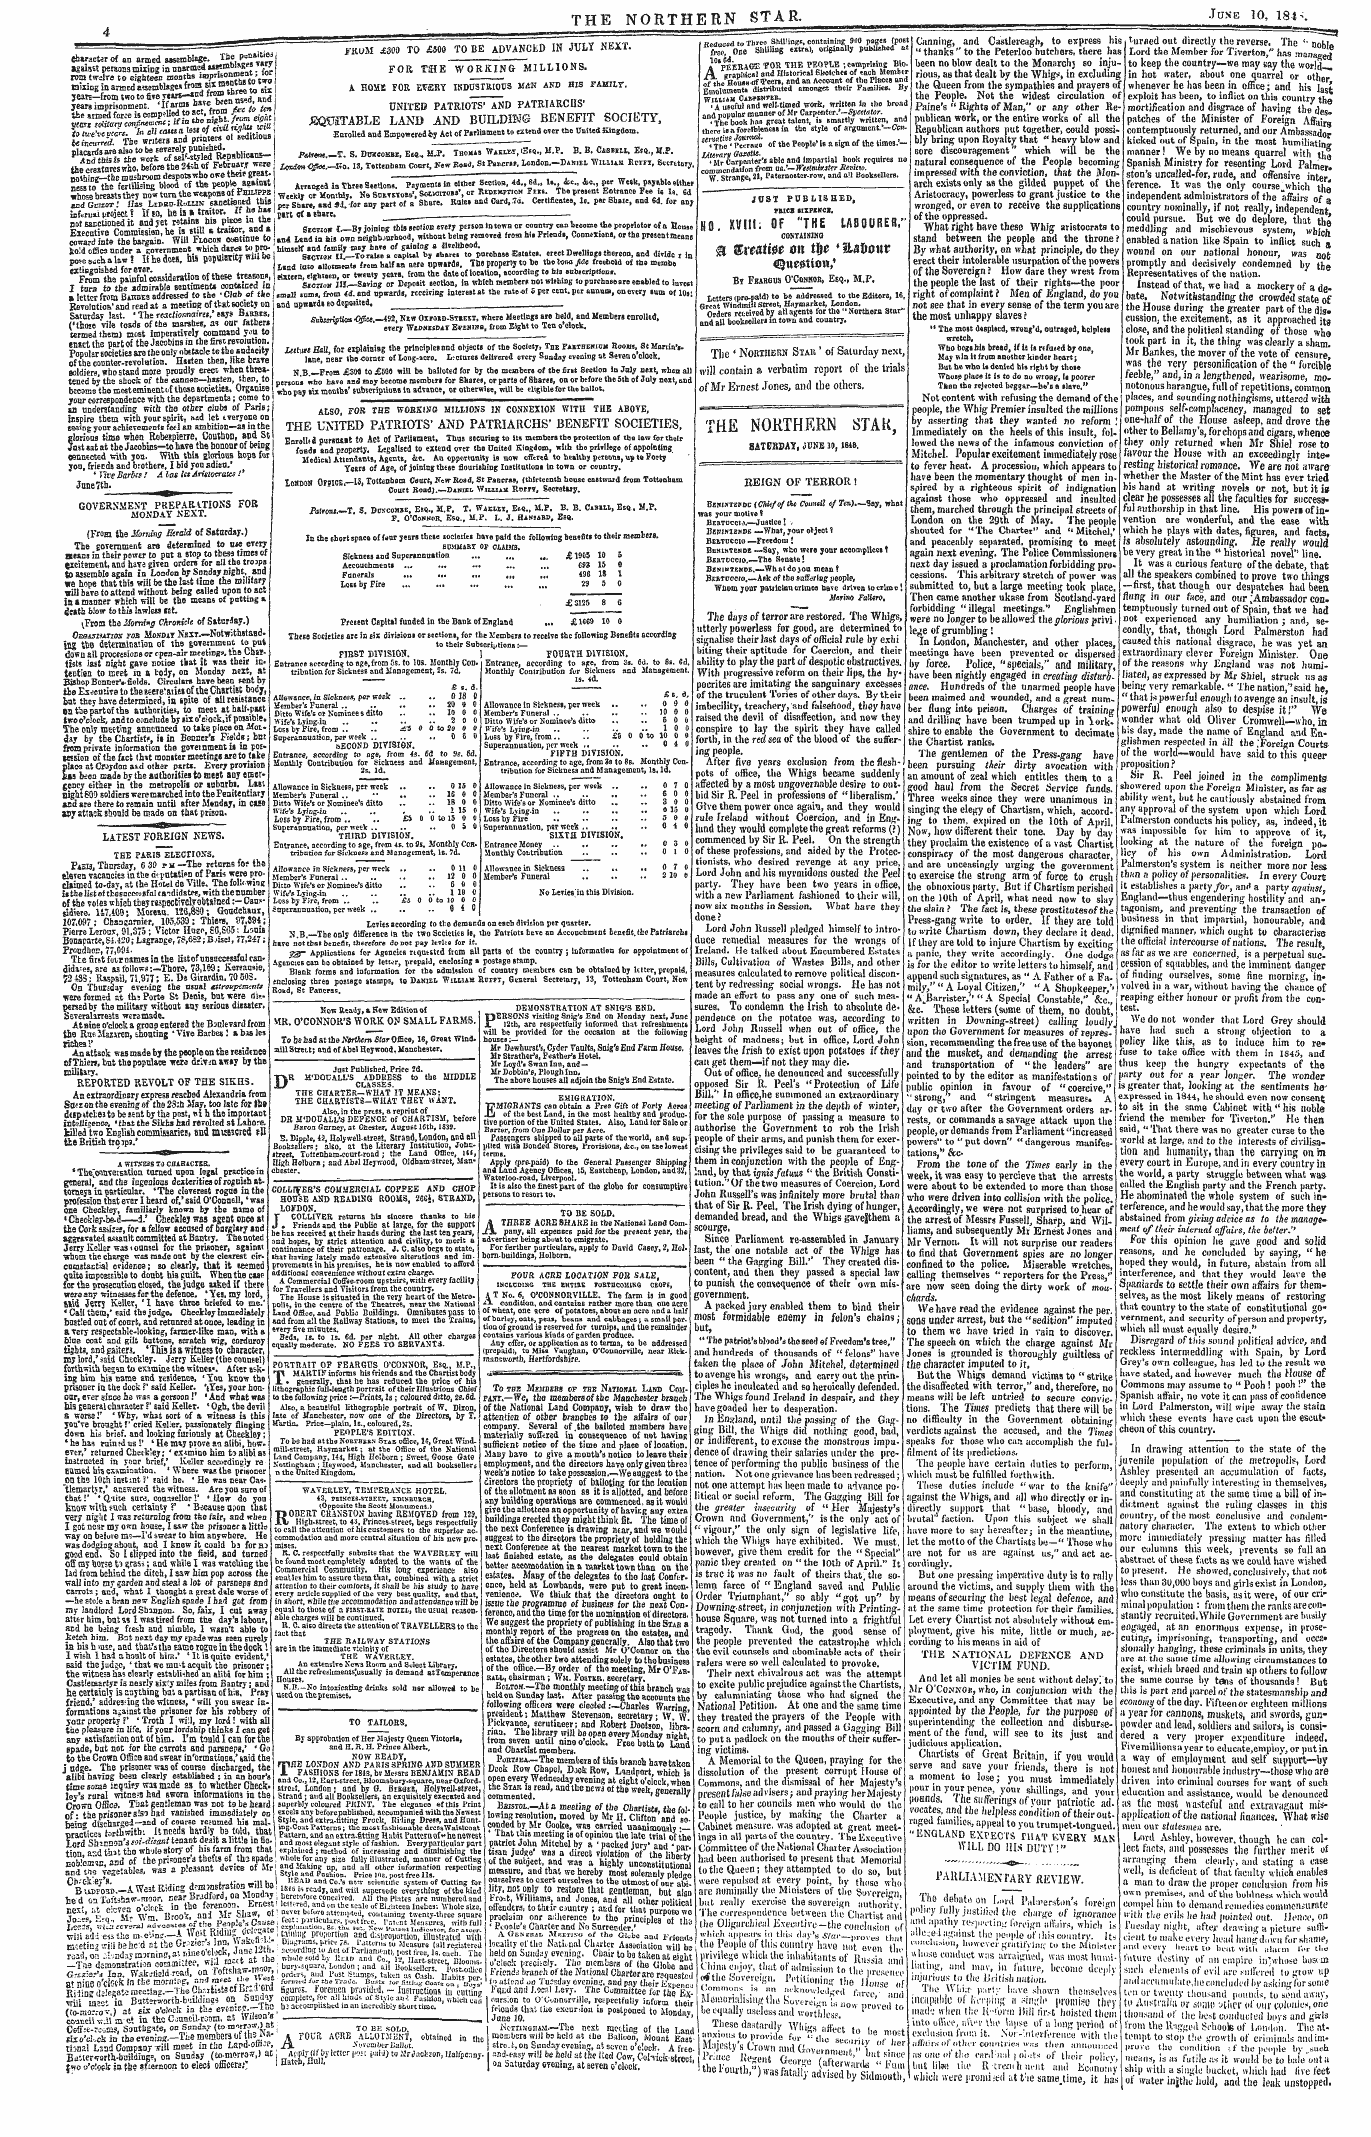 Northern Star (1837-1852): jS F Y, 3rd edition - Ad00425